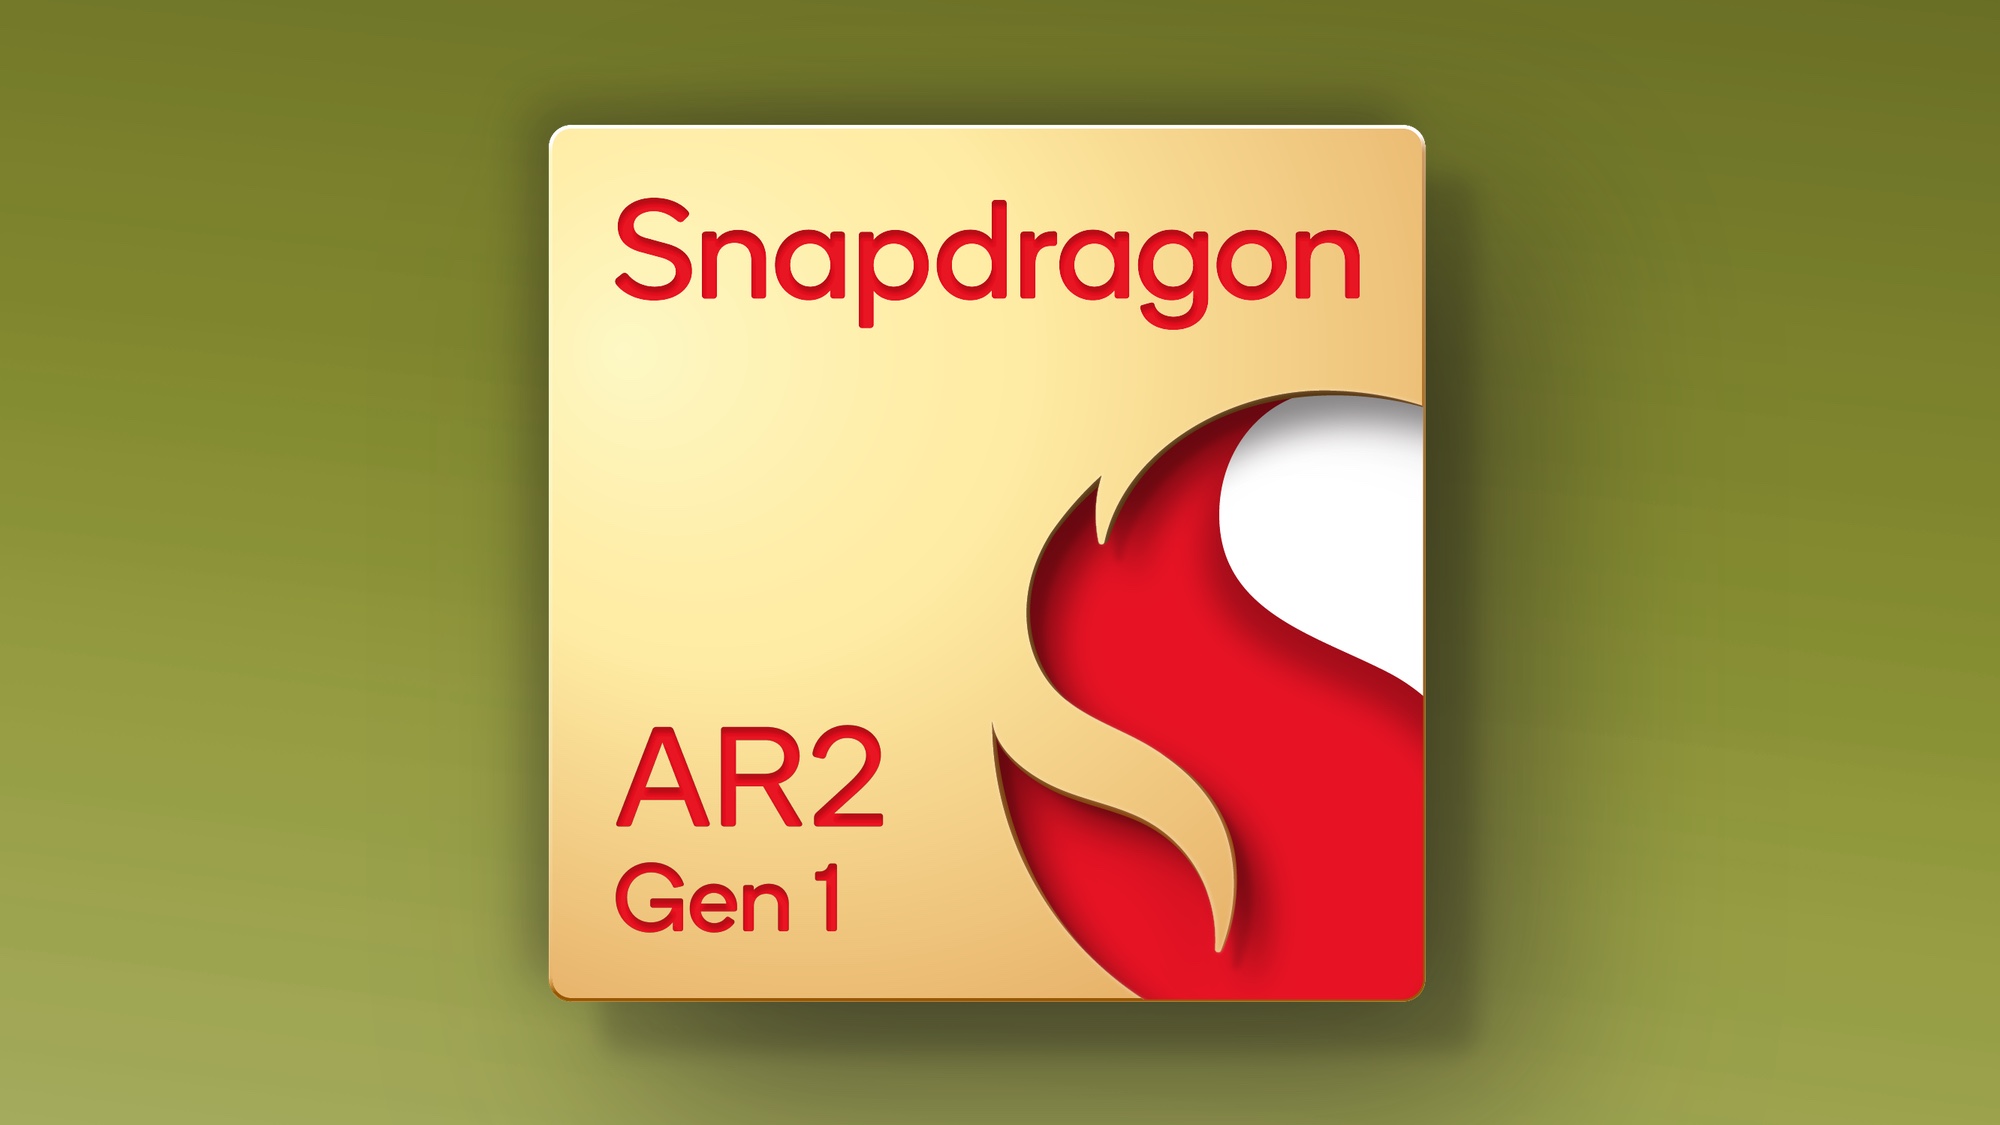 Snapdragon AR2 Gen 1